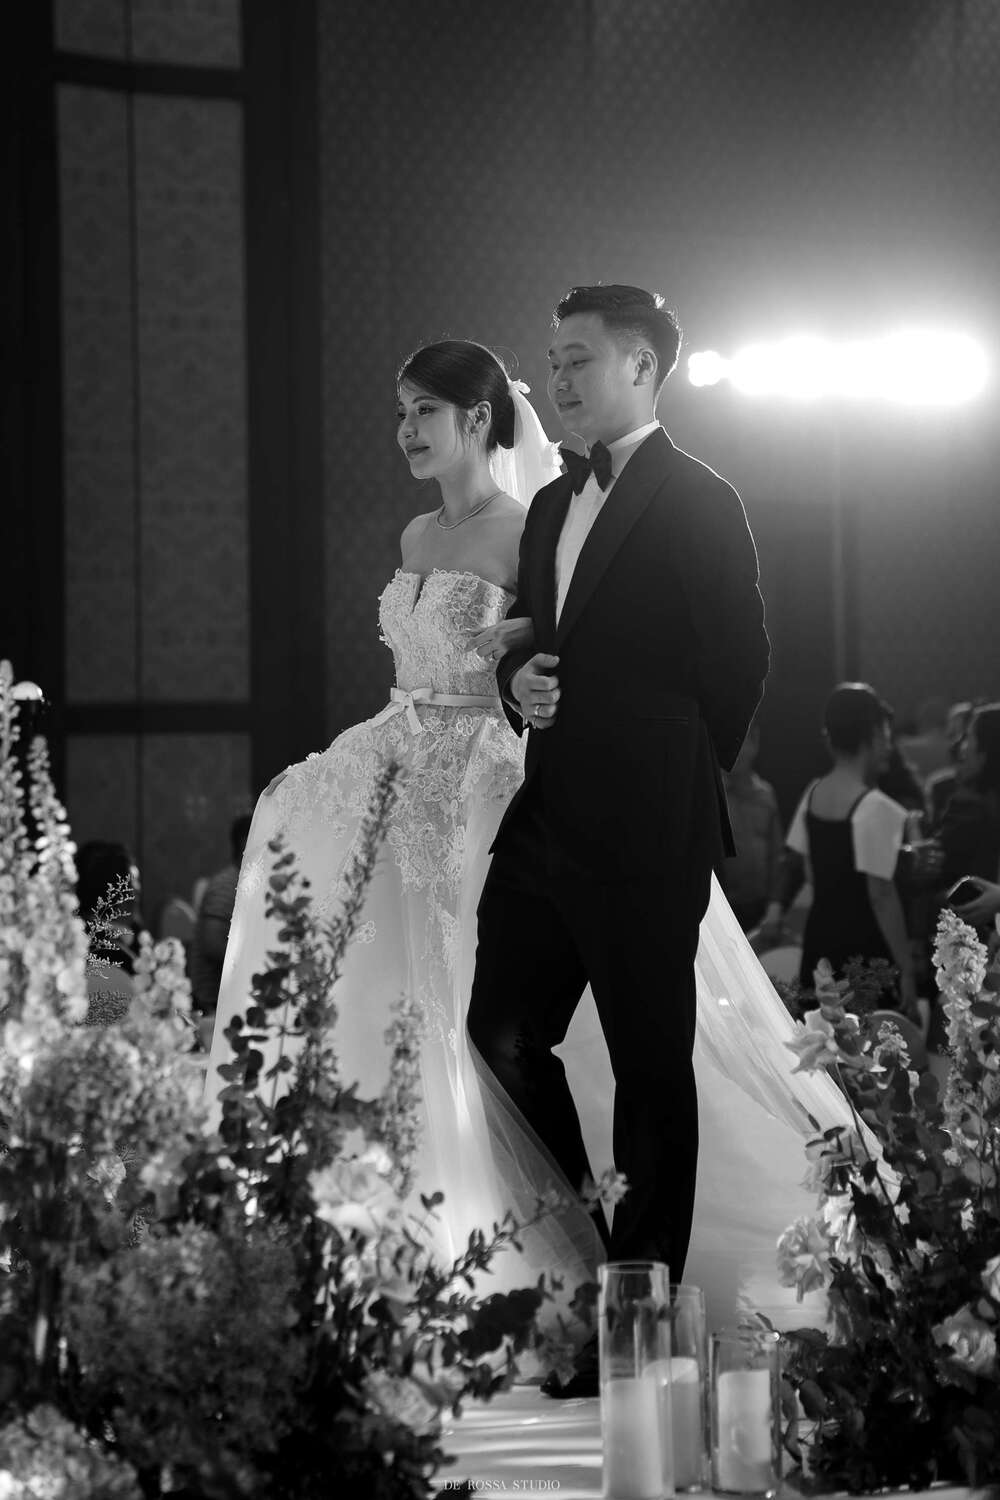 PhiLinh Wedding – Ngọc & Chiến Almaz (29)